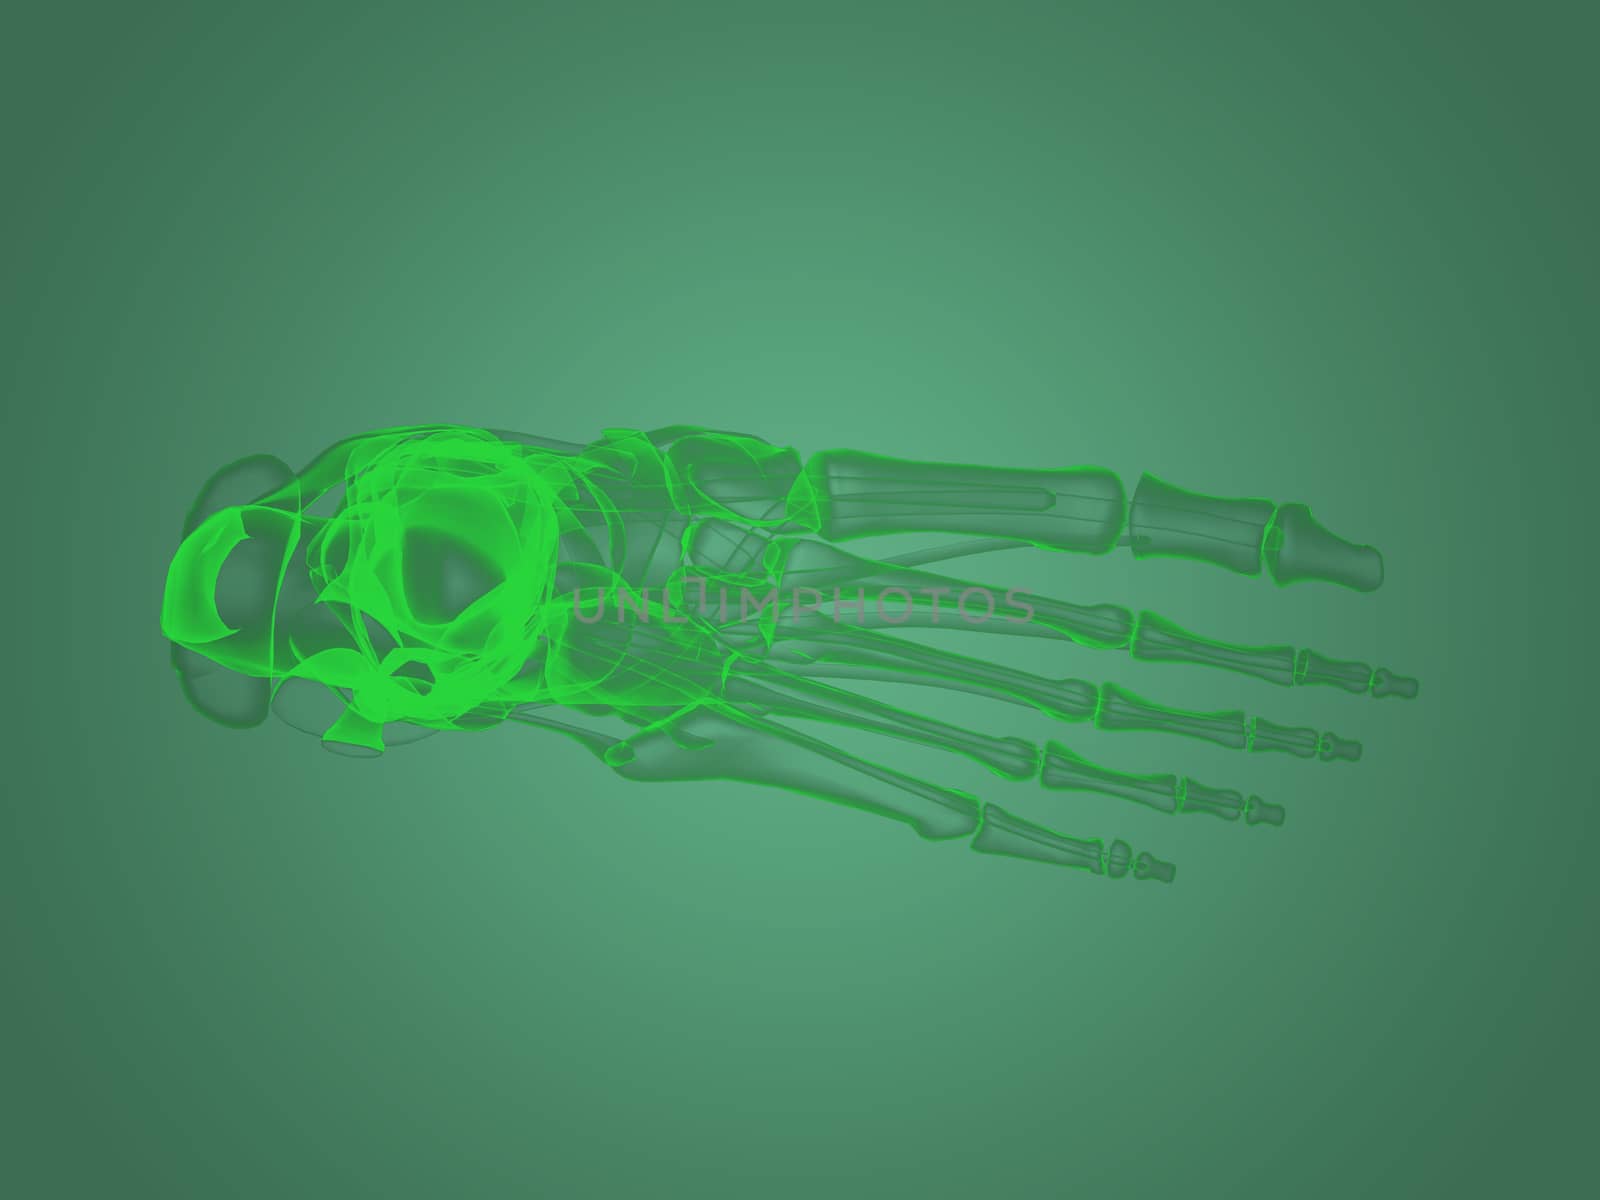 X-ray foot anatomy by teerawit